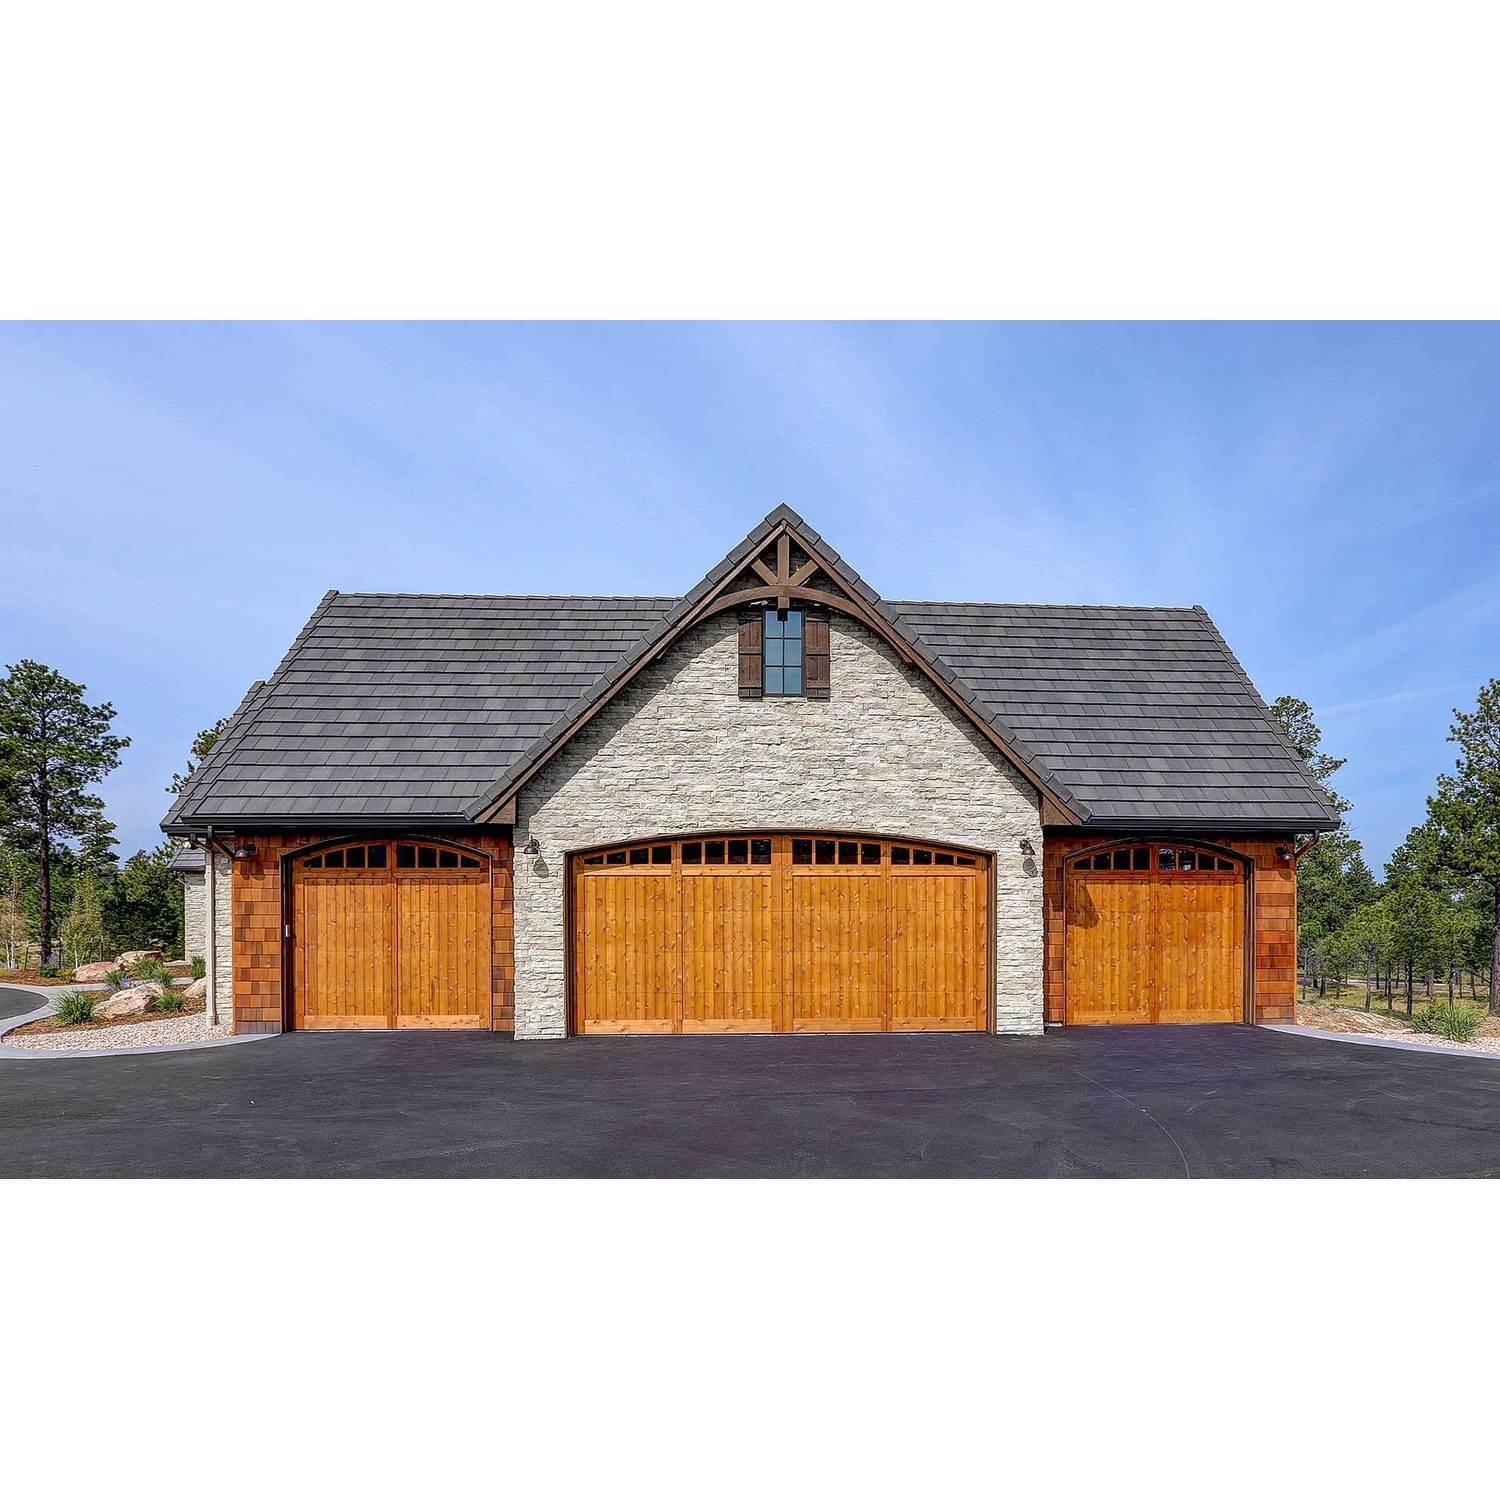 43. Galiant Homes building at 4783 Farmingdale Dr, Colorado Springs, CO 80918